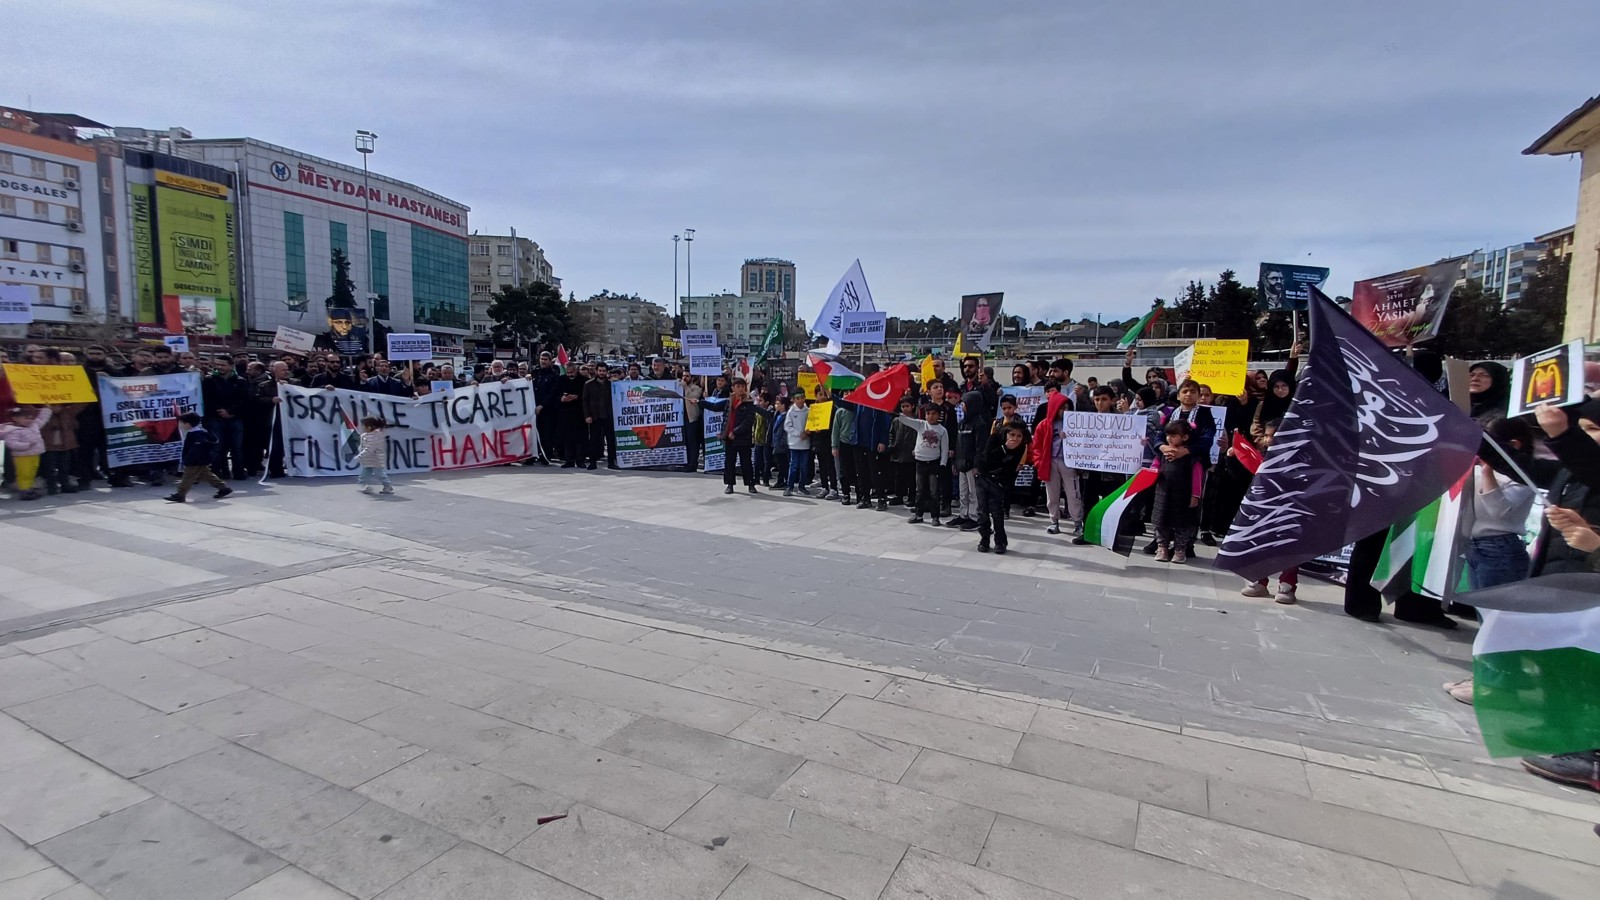 Şanlıurfa'da "İsrail'le Ticaret Filistin'e İhanet" eylemi